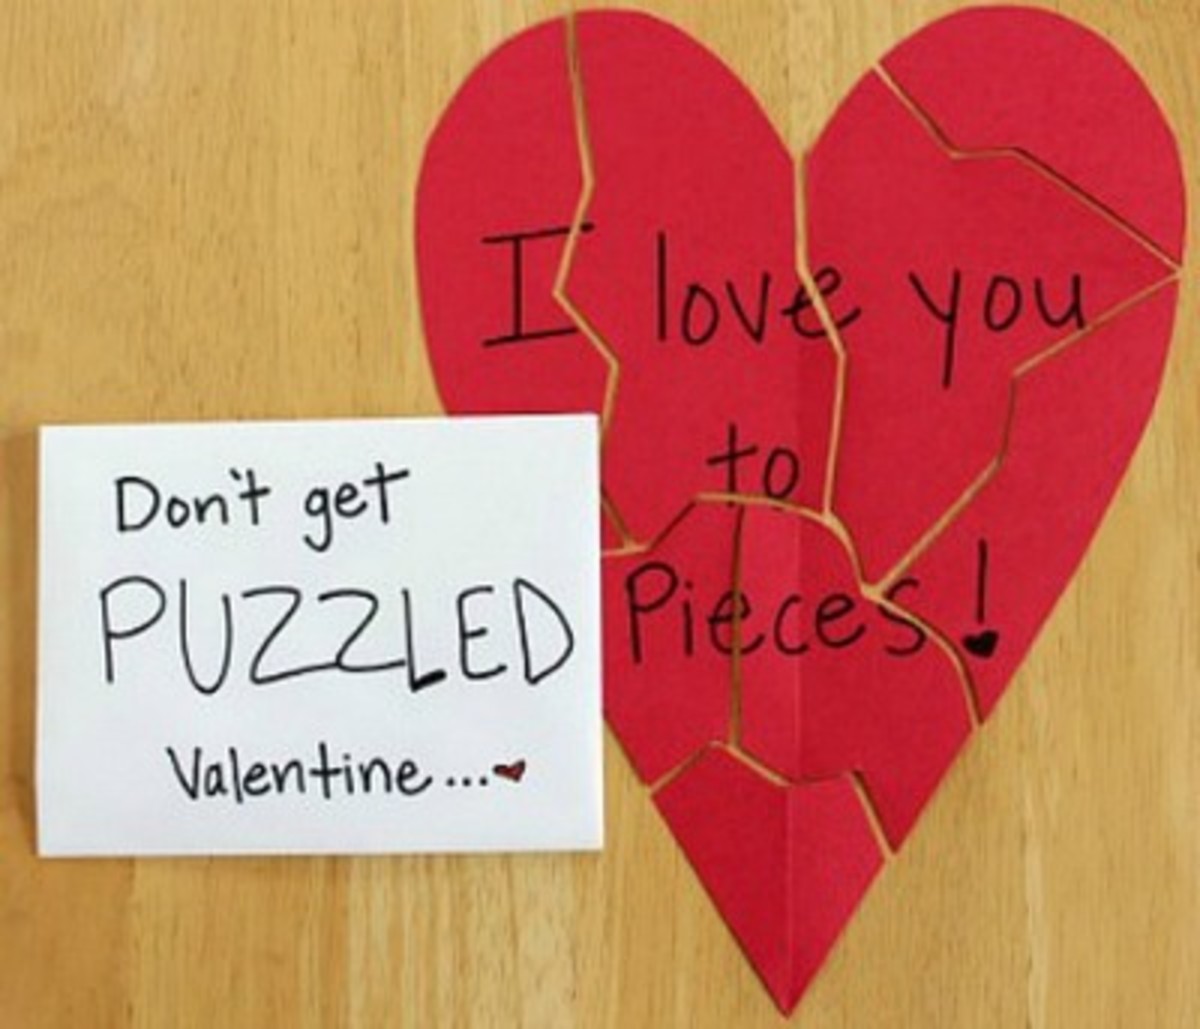 Puzzle-Piece Valentine